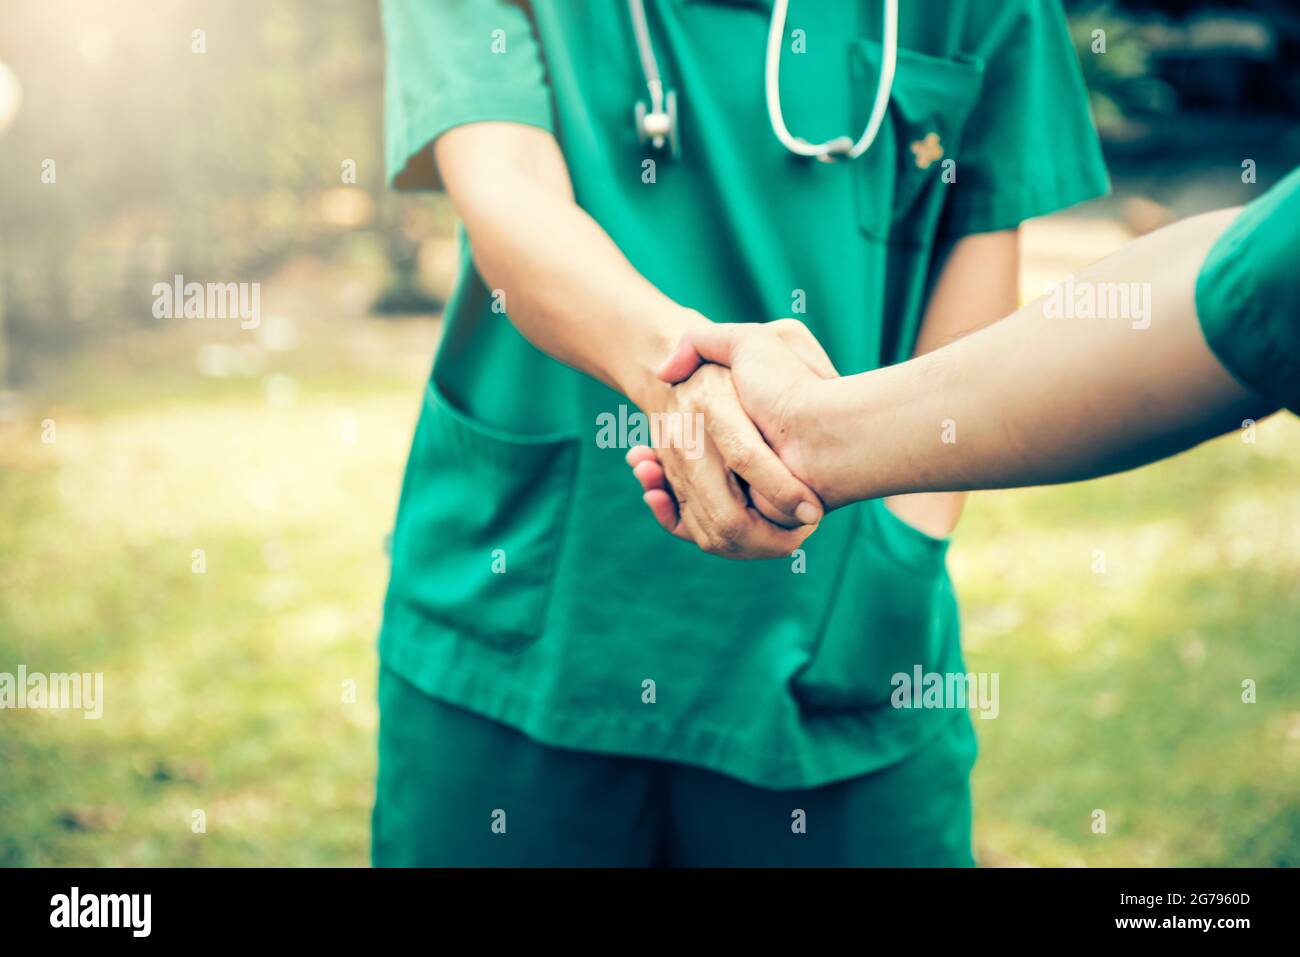 Surgeon medical people handshaking.Cross processing and Split tone instragram like process. Stock Photo